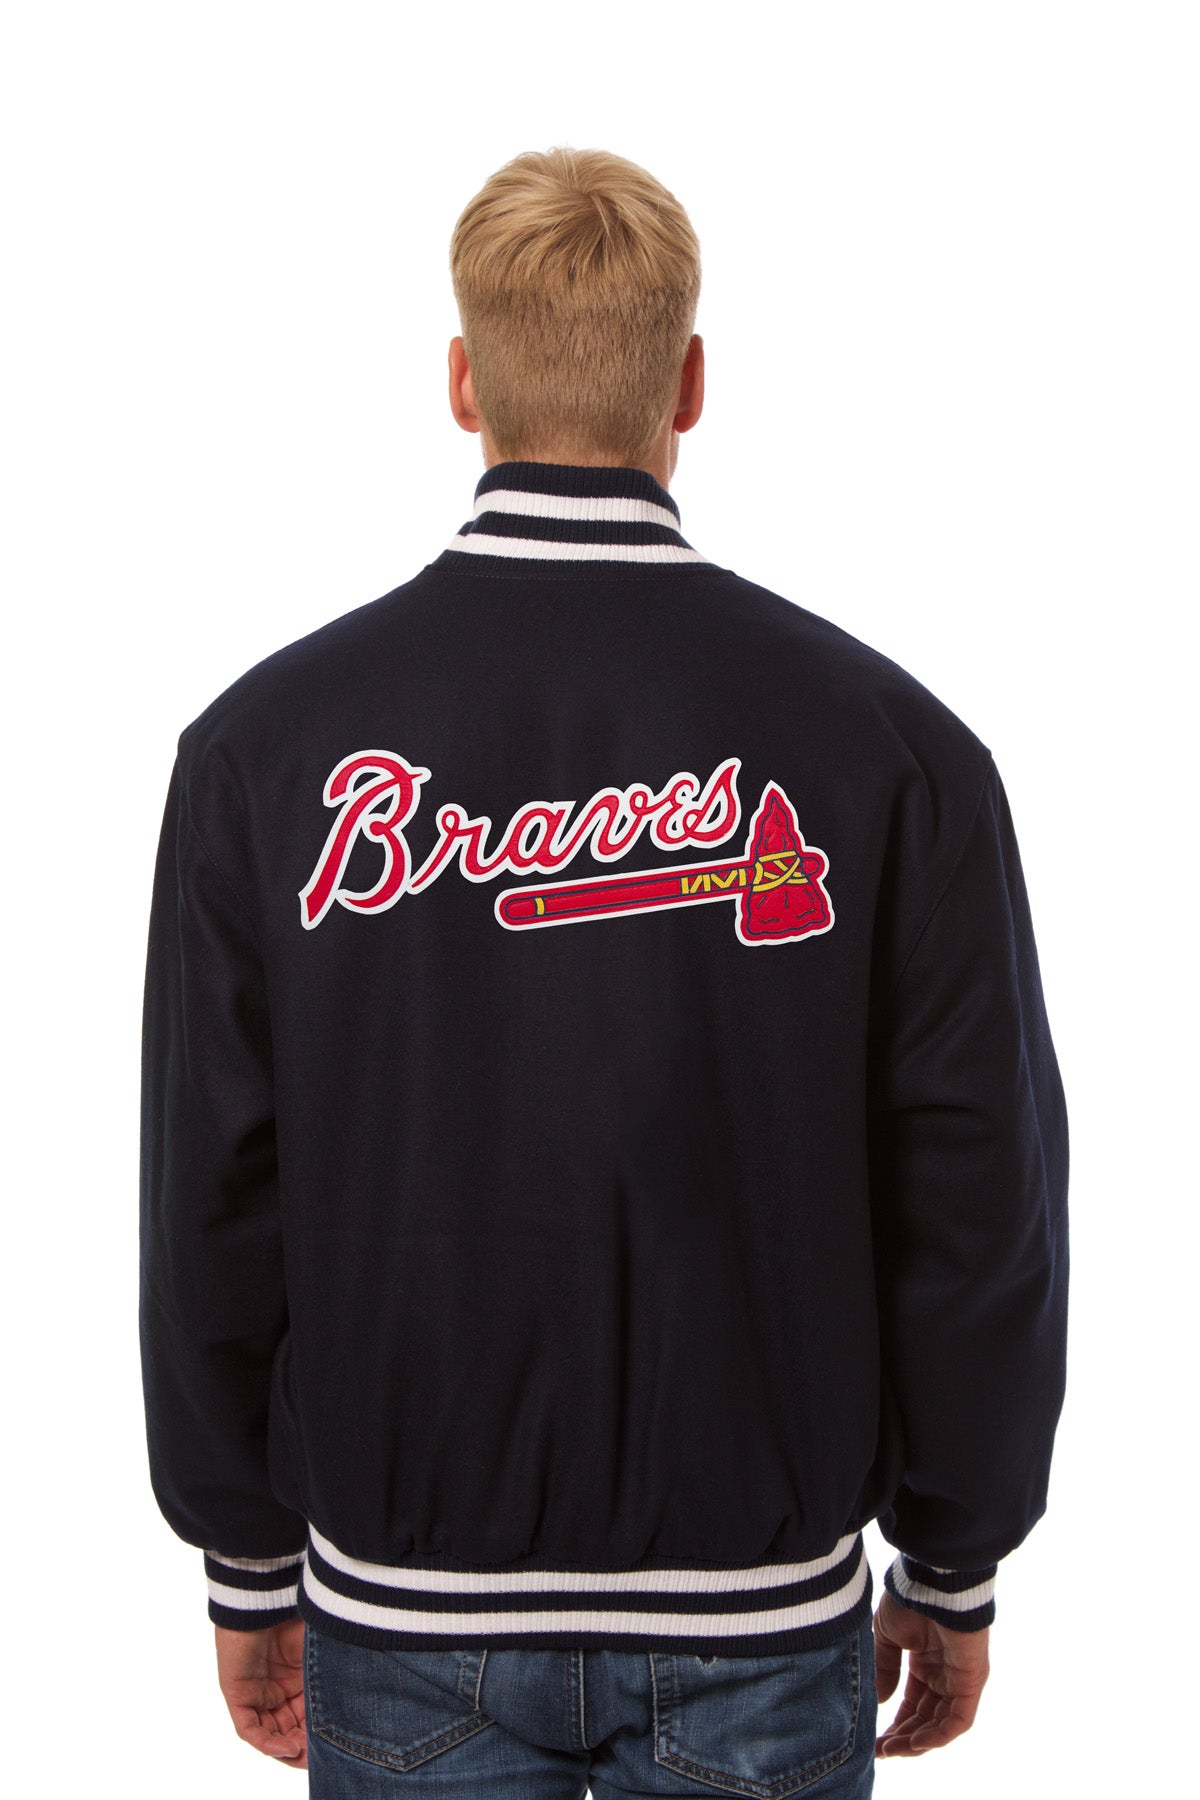 Starter Atlanta Braves World Series Champions 2021 Jacket